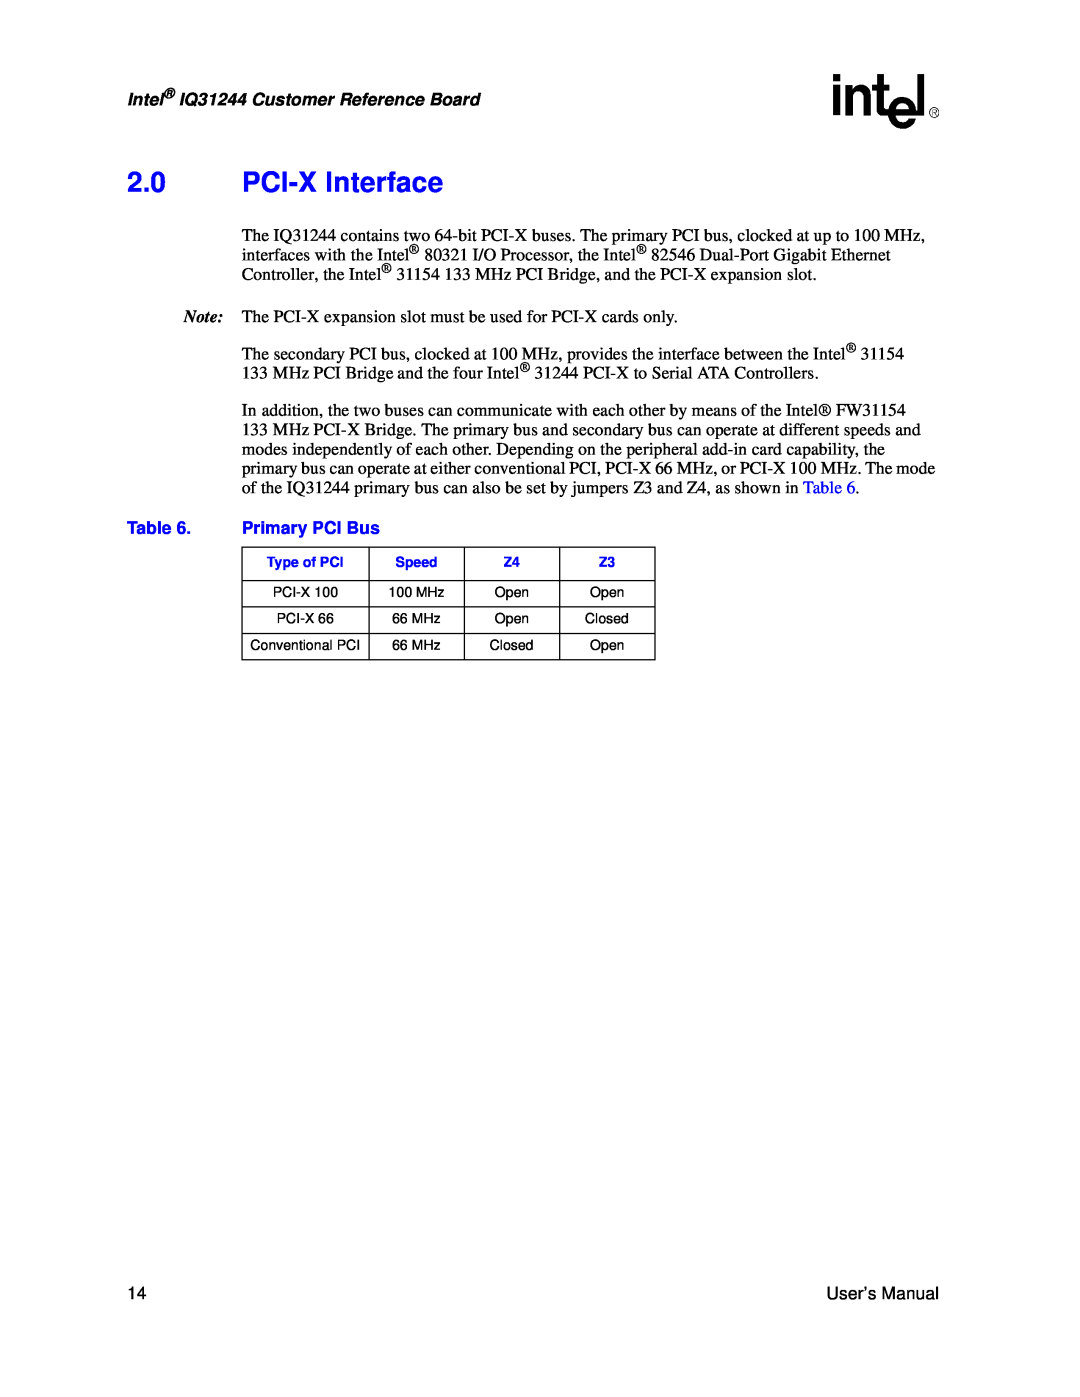 Intel user manual 2.0PCI-XInterface, Primary PCI Bus, Intel IQ31244 Customer Reference Board 